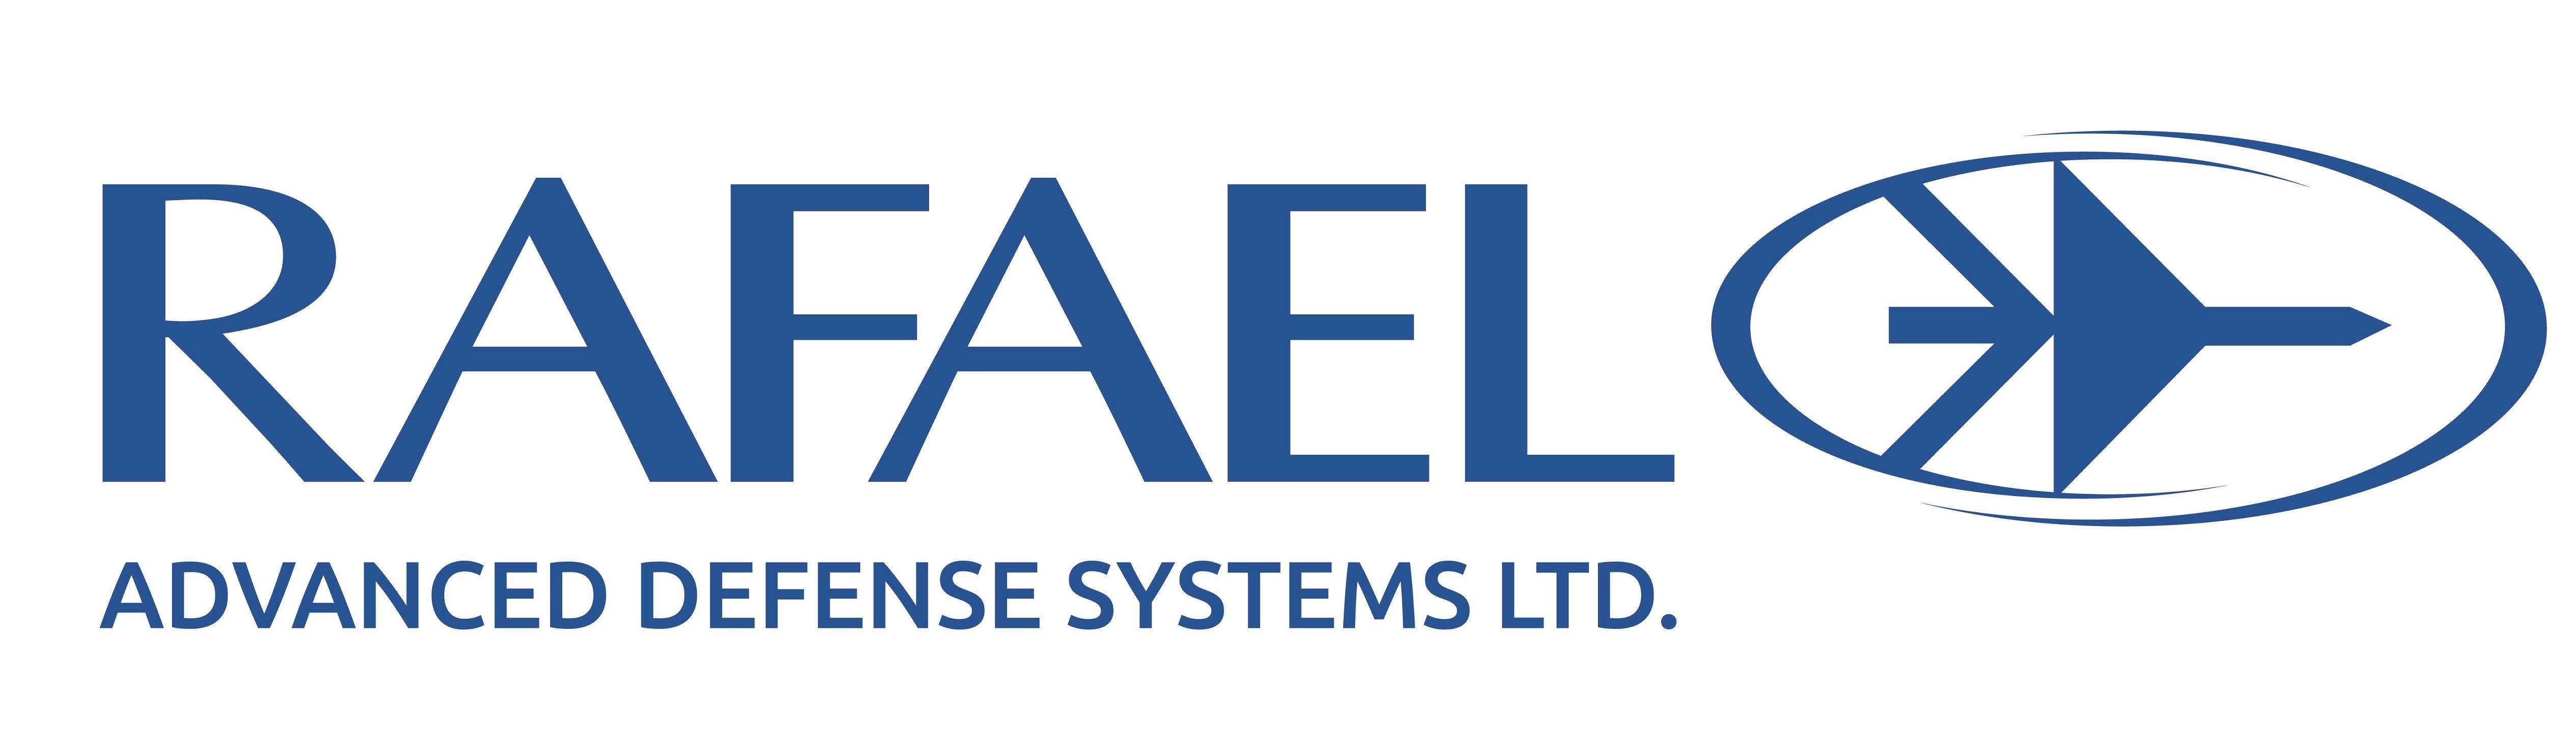 Rafael Advanced Defense Systems Ltd